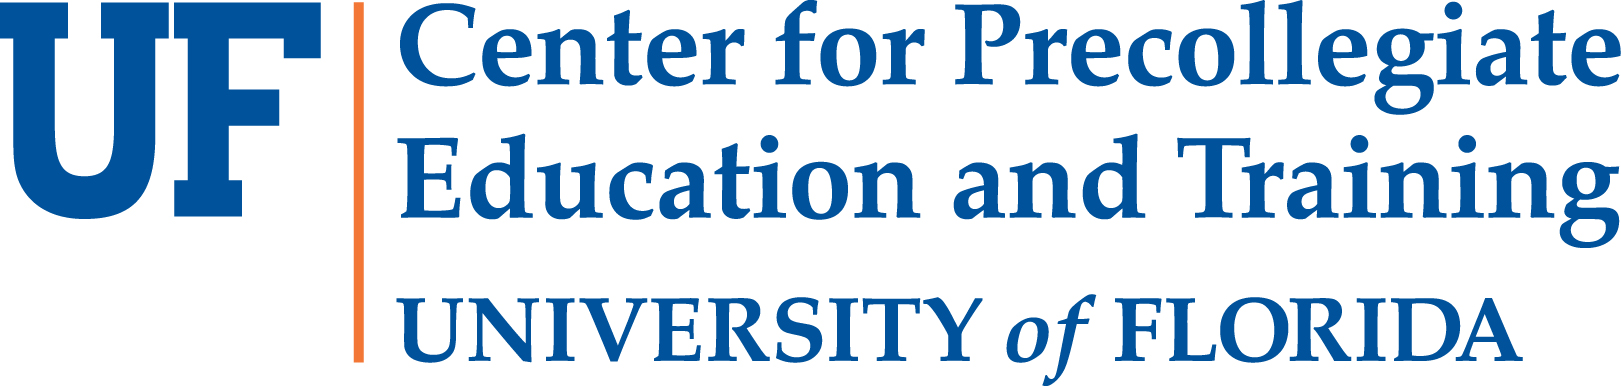 UF Center for Precollegiate Education and Training logo